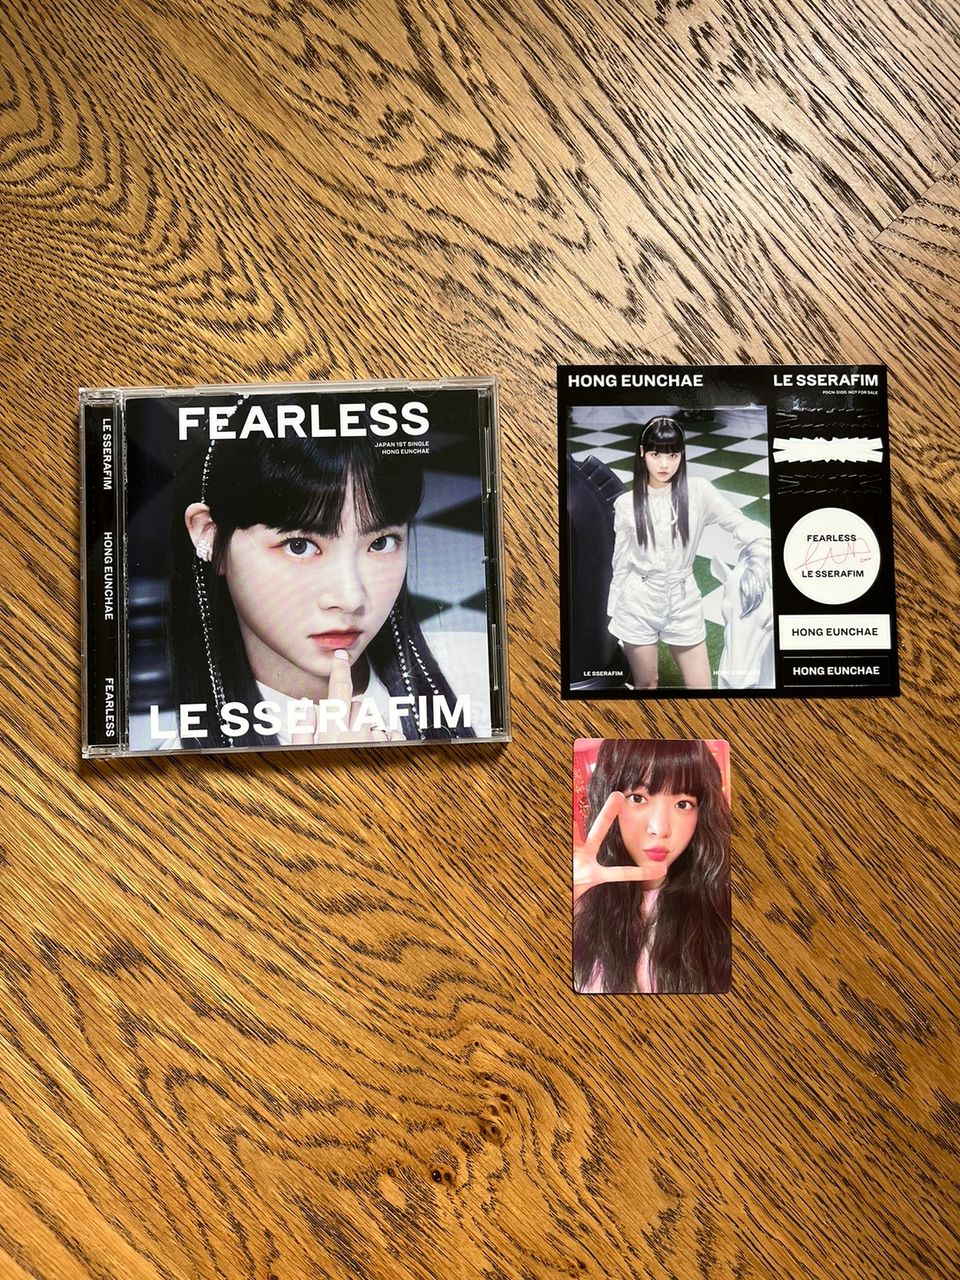 Le sserafim Fearless Japan- Kpop albumi